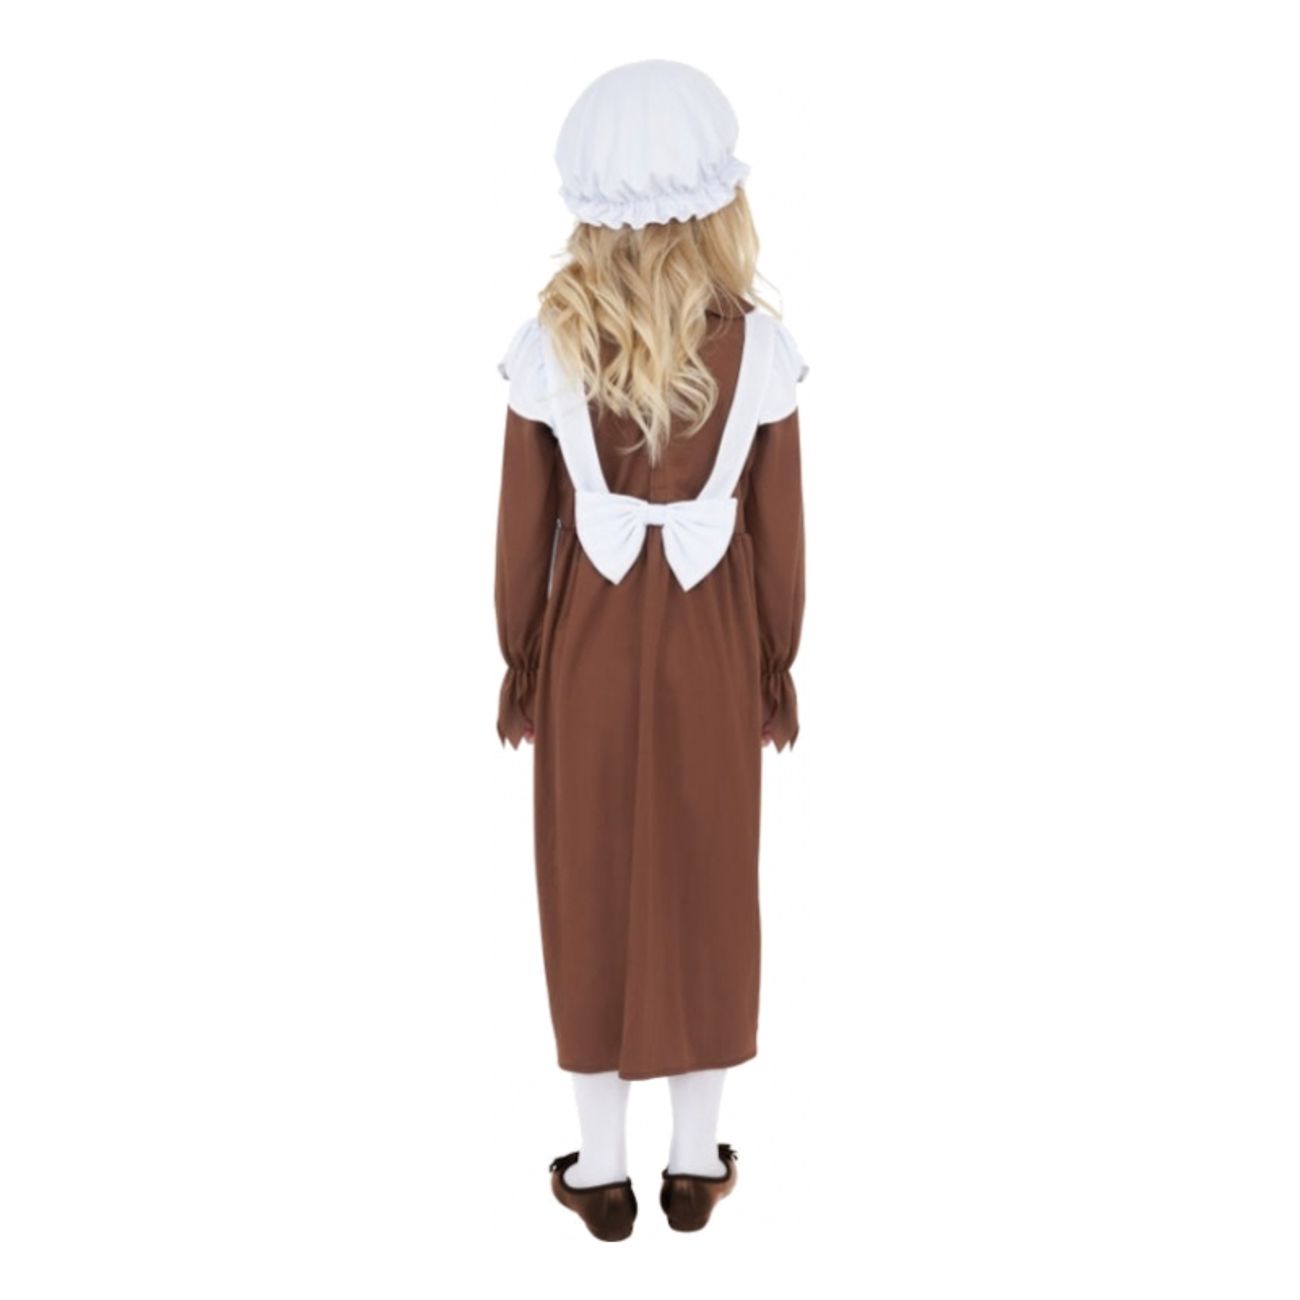 child-poor-victorian-costume-small-3